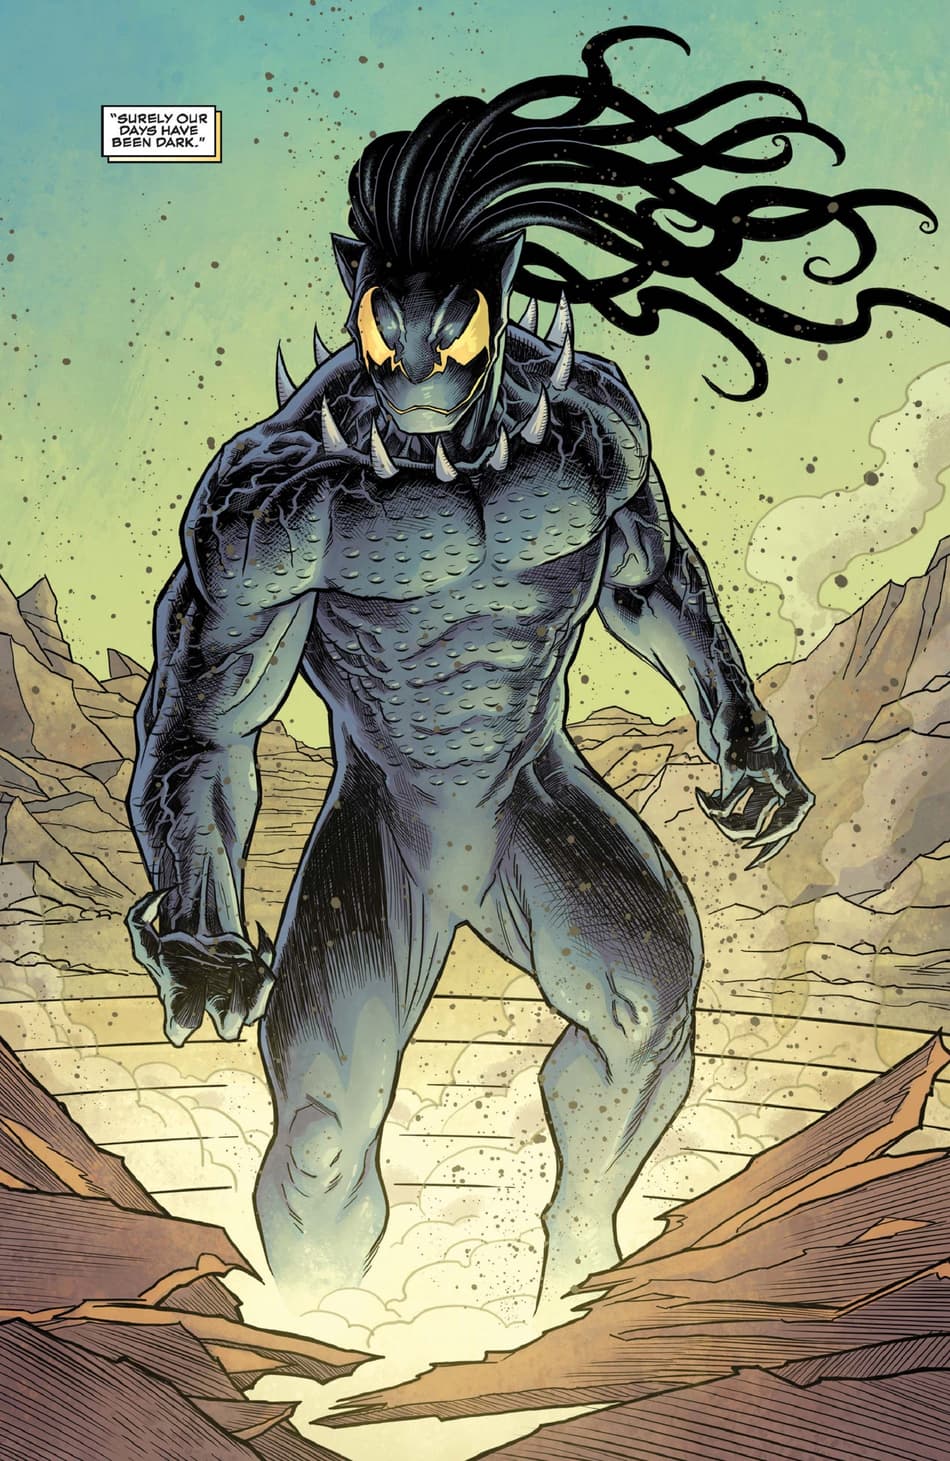 N’Jadaka bonded with an alien symbiote in BLACK PANTHER (2018) #19.